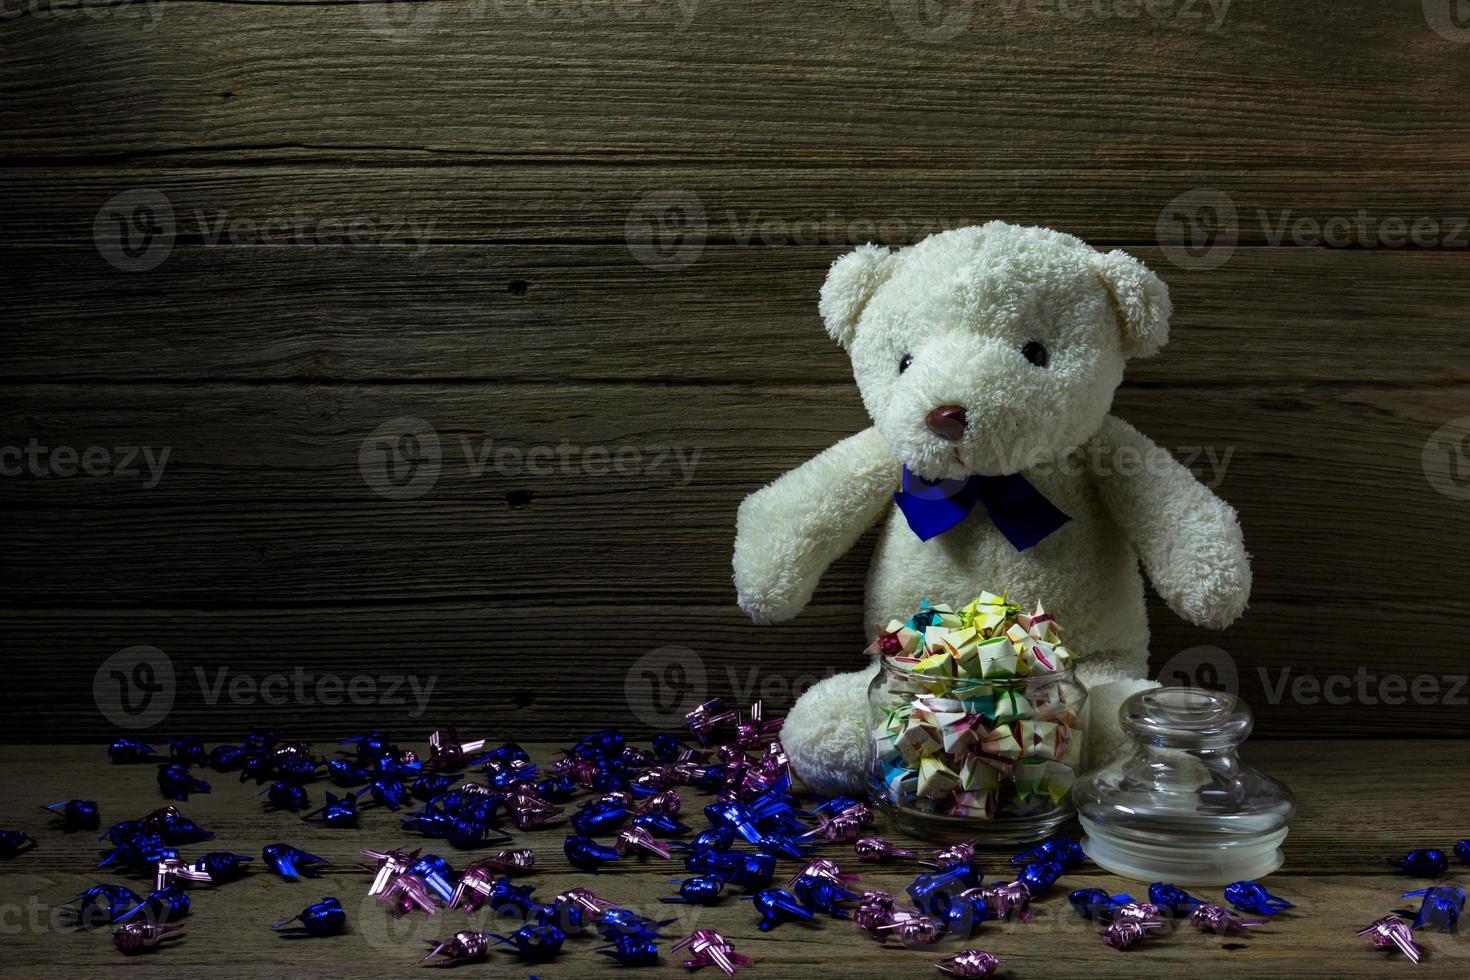 Teddy bear on wood background, still life photo